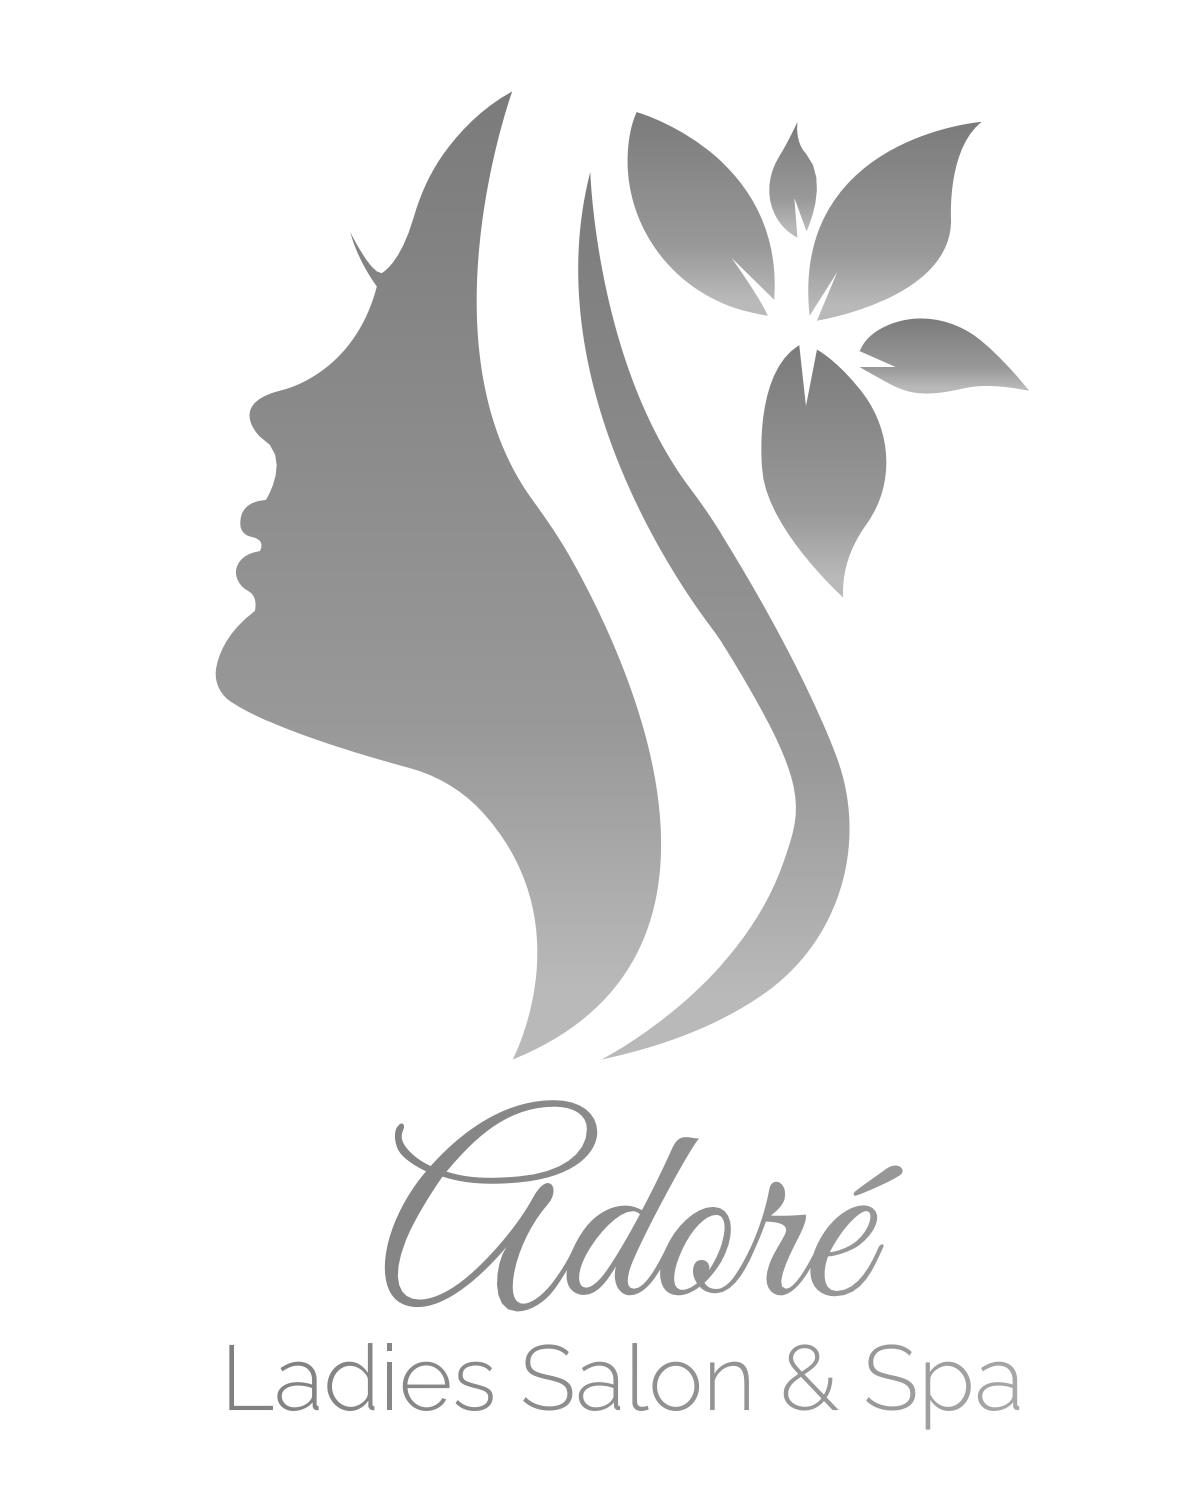 Adore Ladies Salon & Spa 